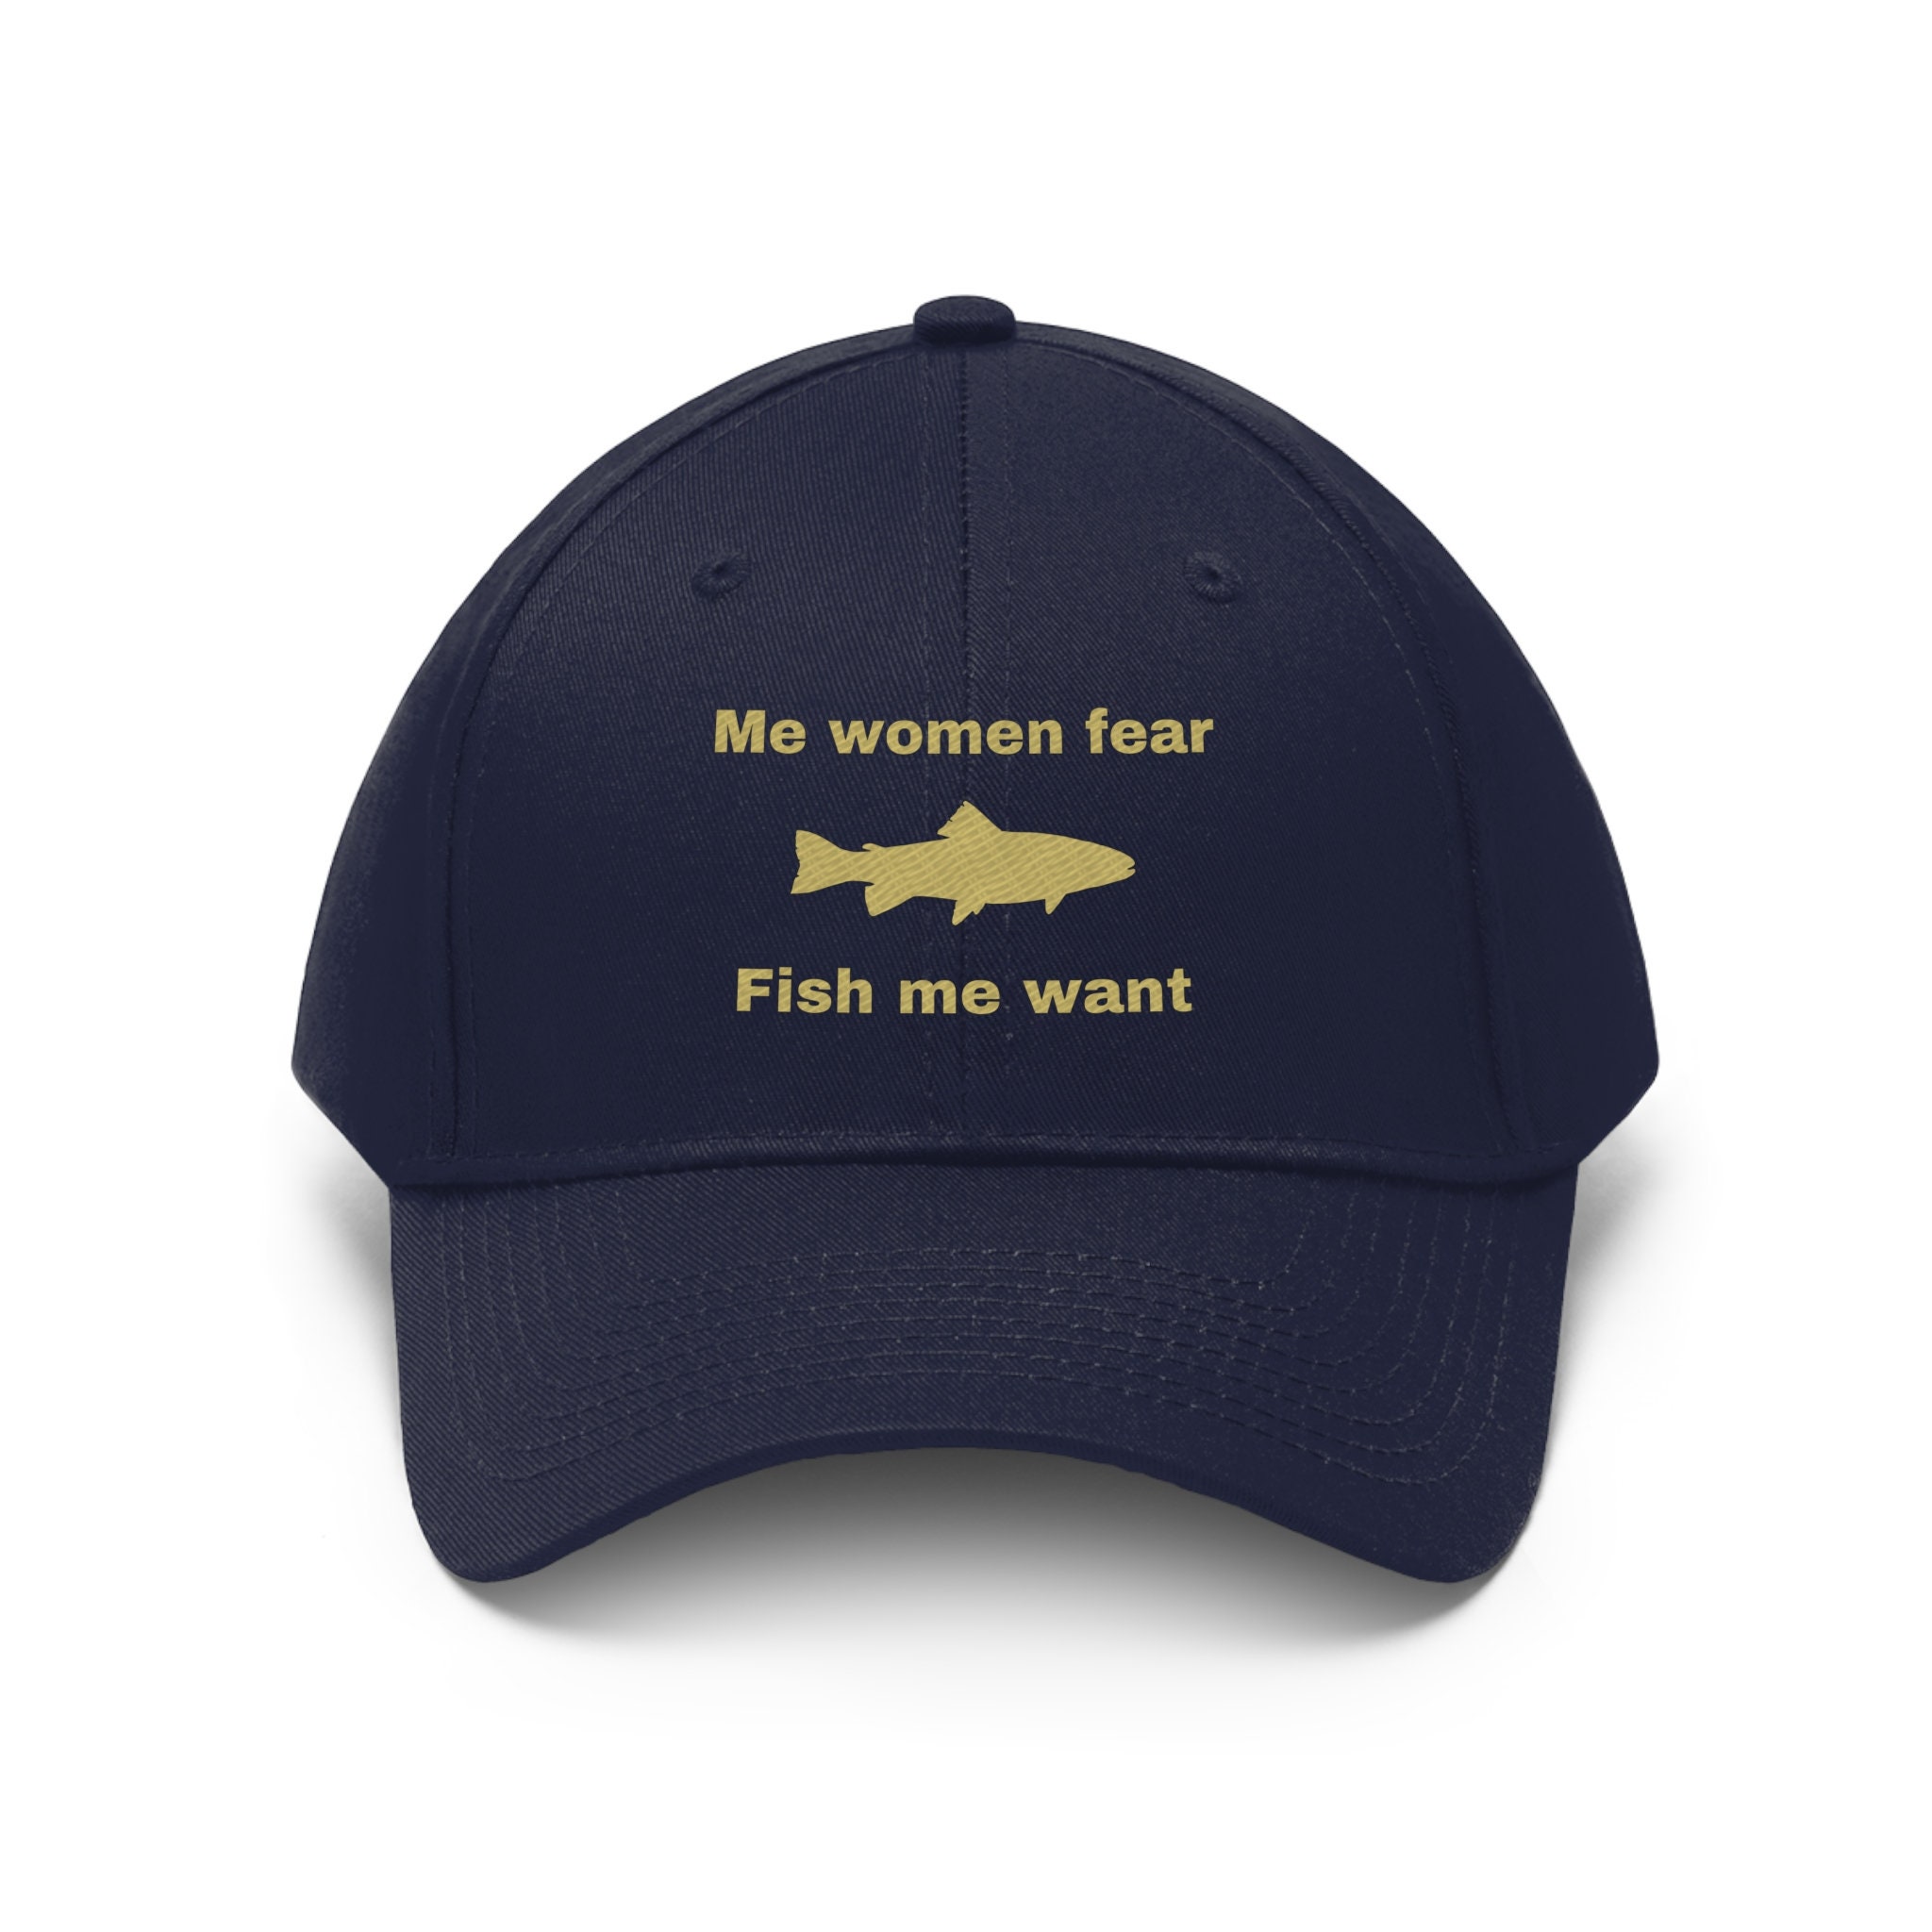 me women fear fish me want hat, funny fishing hat, women want me fish fear me hat, fishing hat, funny hat, fishing, fishing gift, dad hat